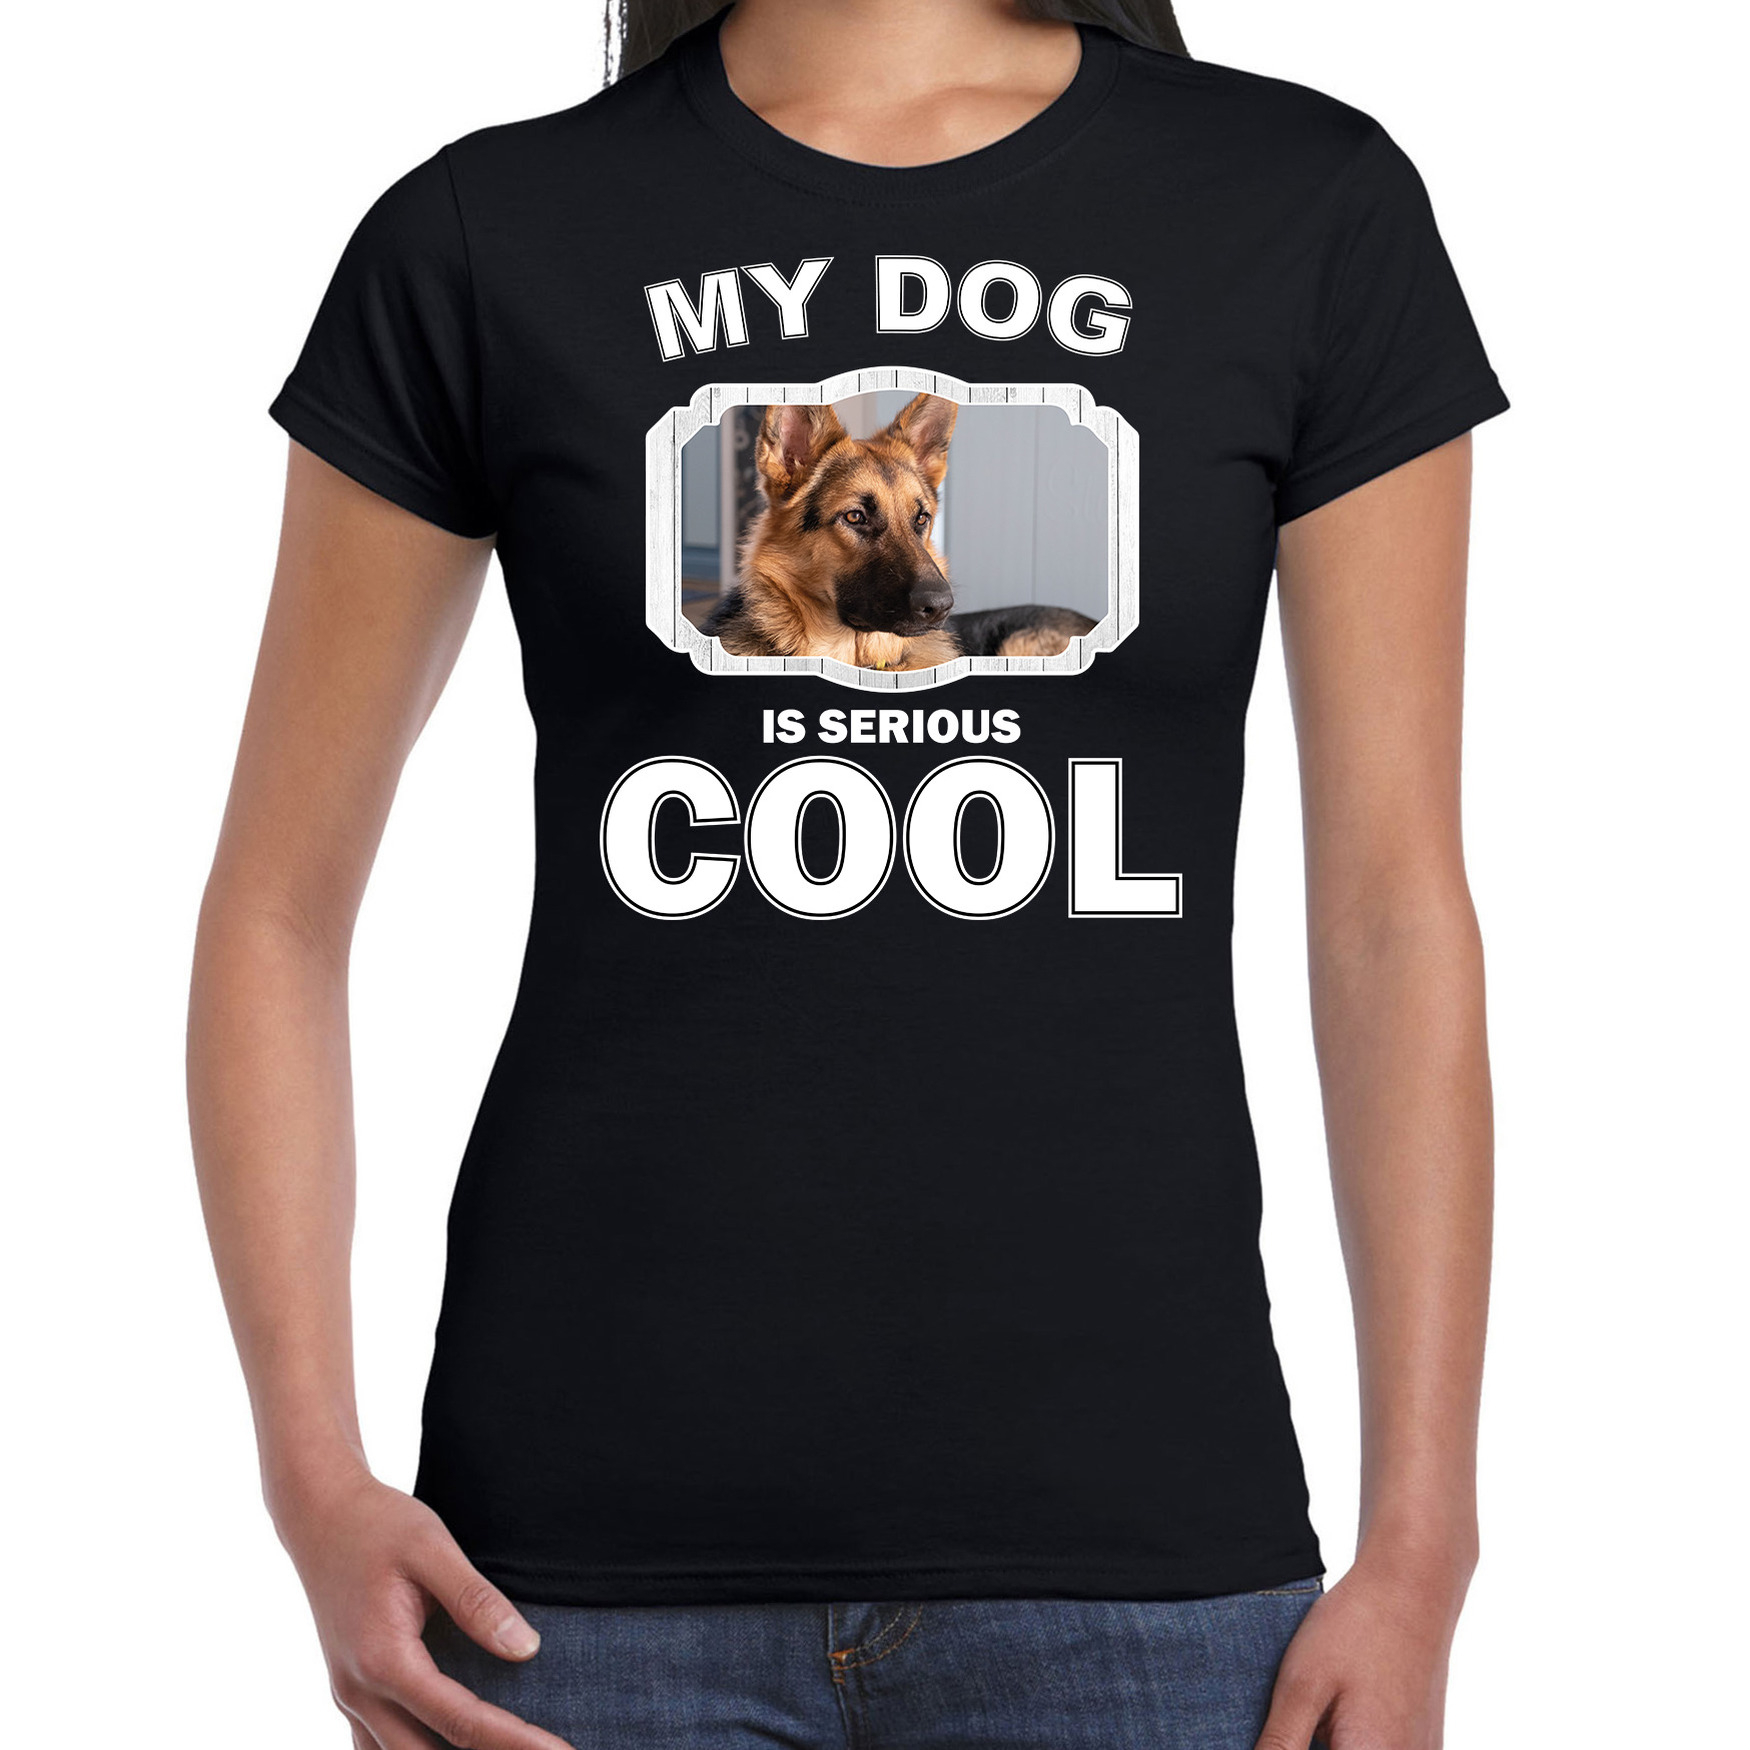 Duitse herder honden t-shirt my dog is serious cool zwart voor dames